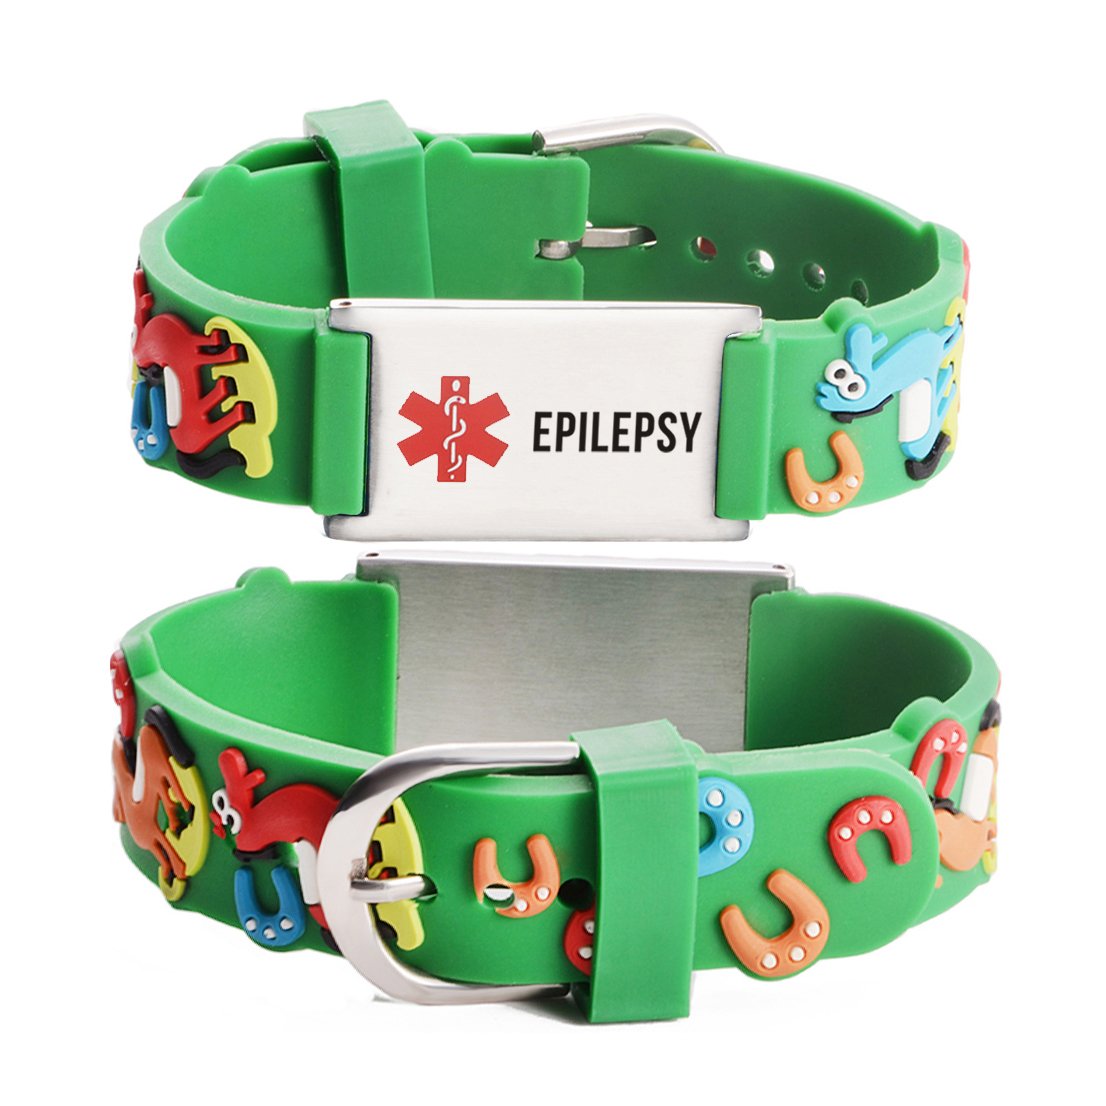 EPILEPSY bracelets for kids-Carousel